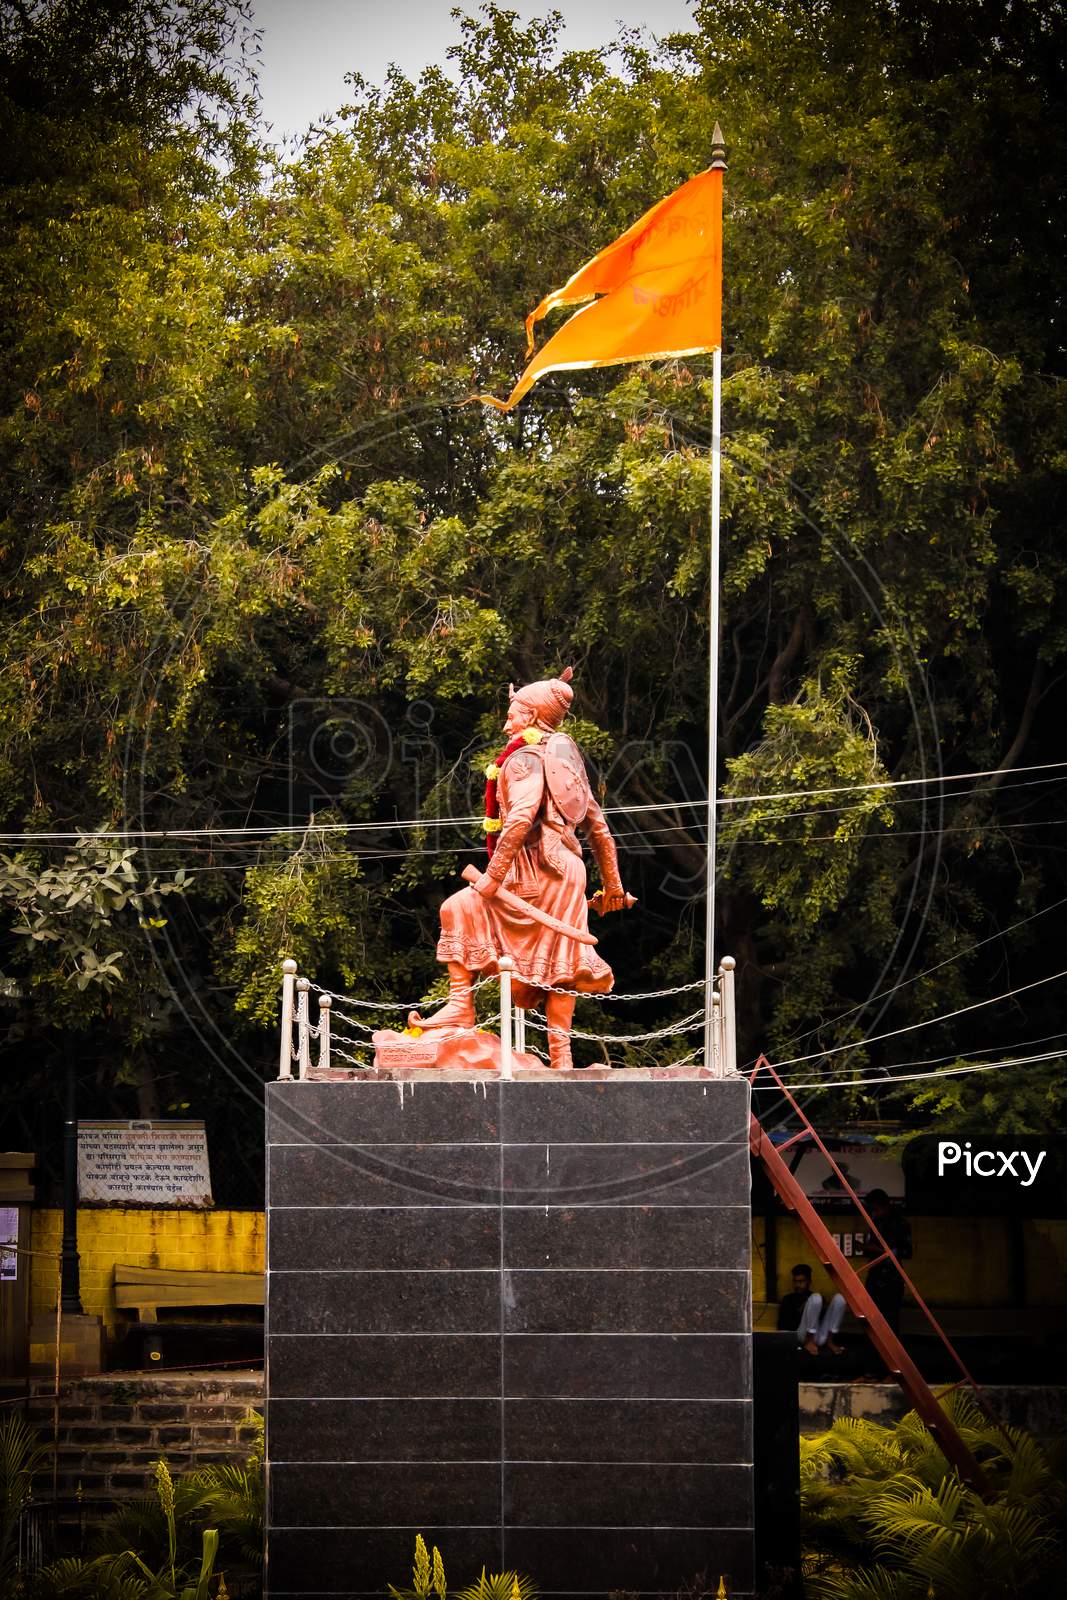 Shivaji Maharaj, The Grate Warrior-King of Maratha Empire.